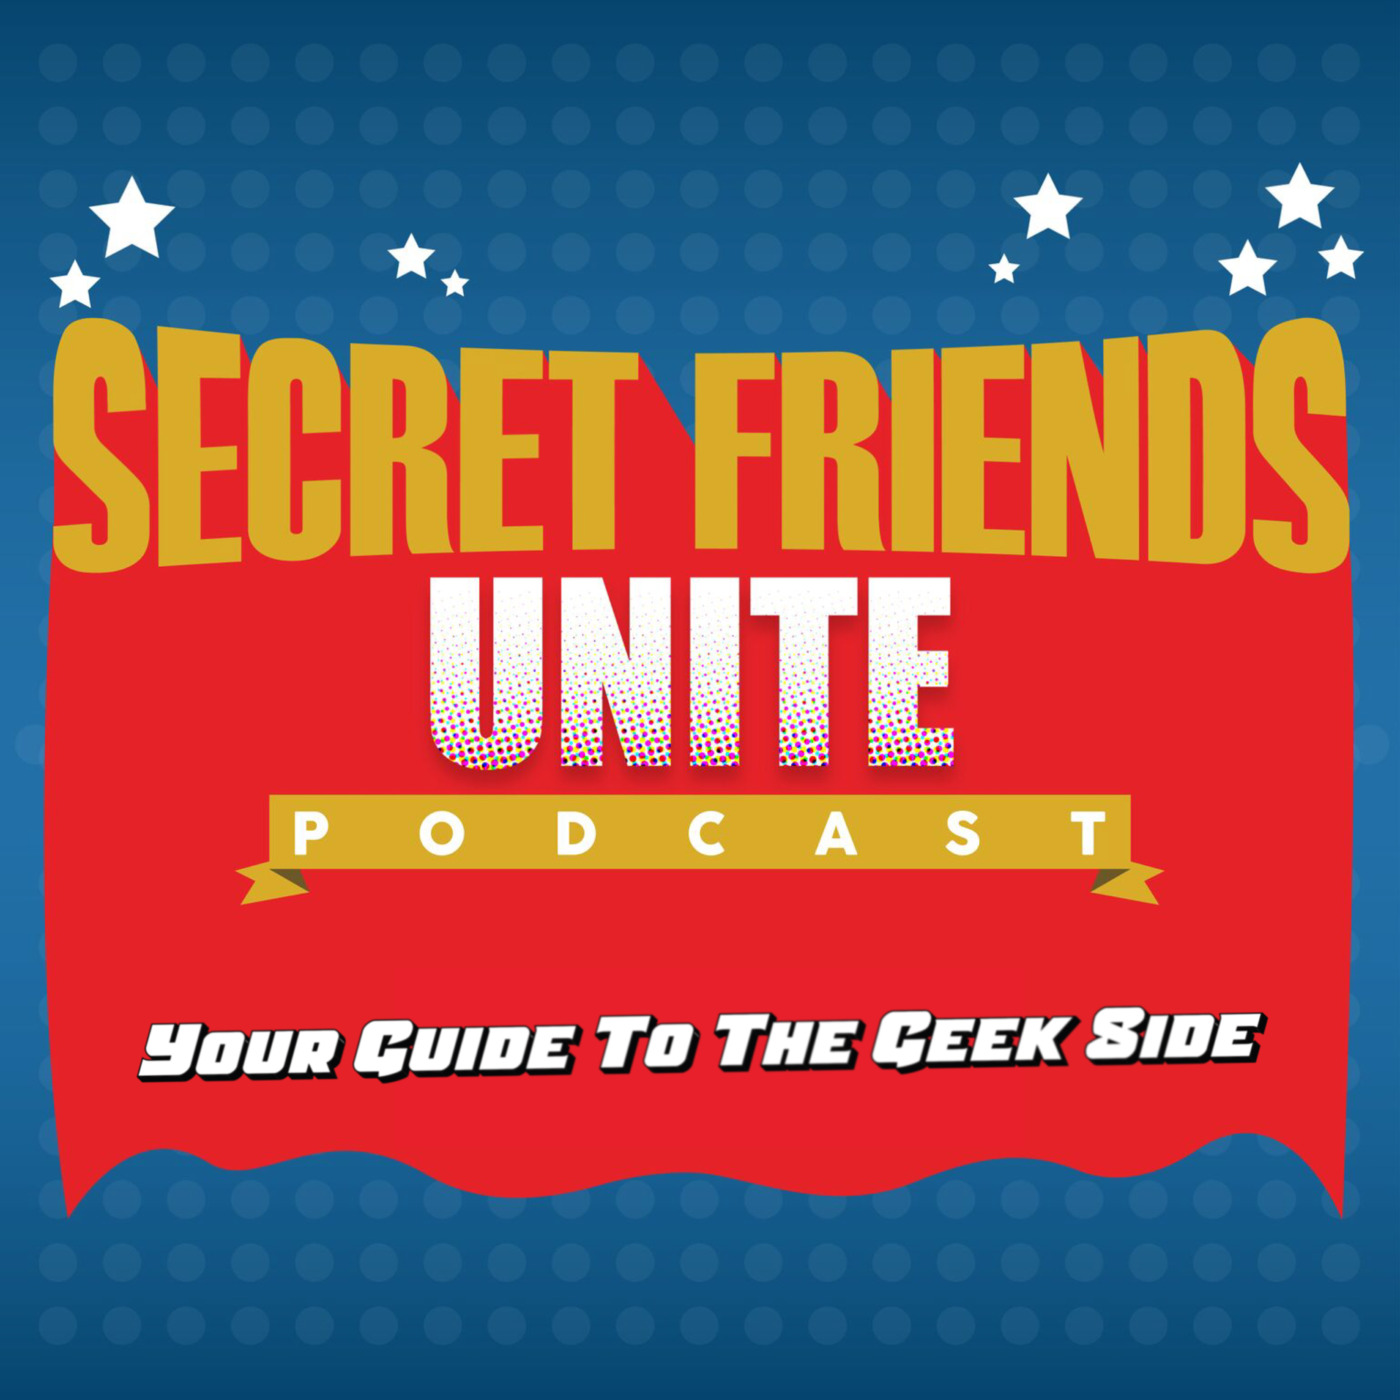 Secret Friends Unite! podcast network